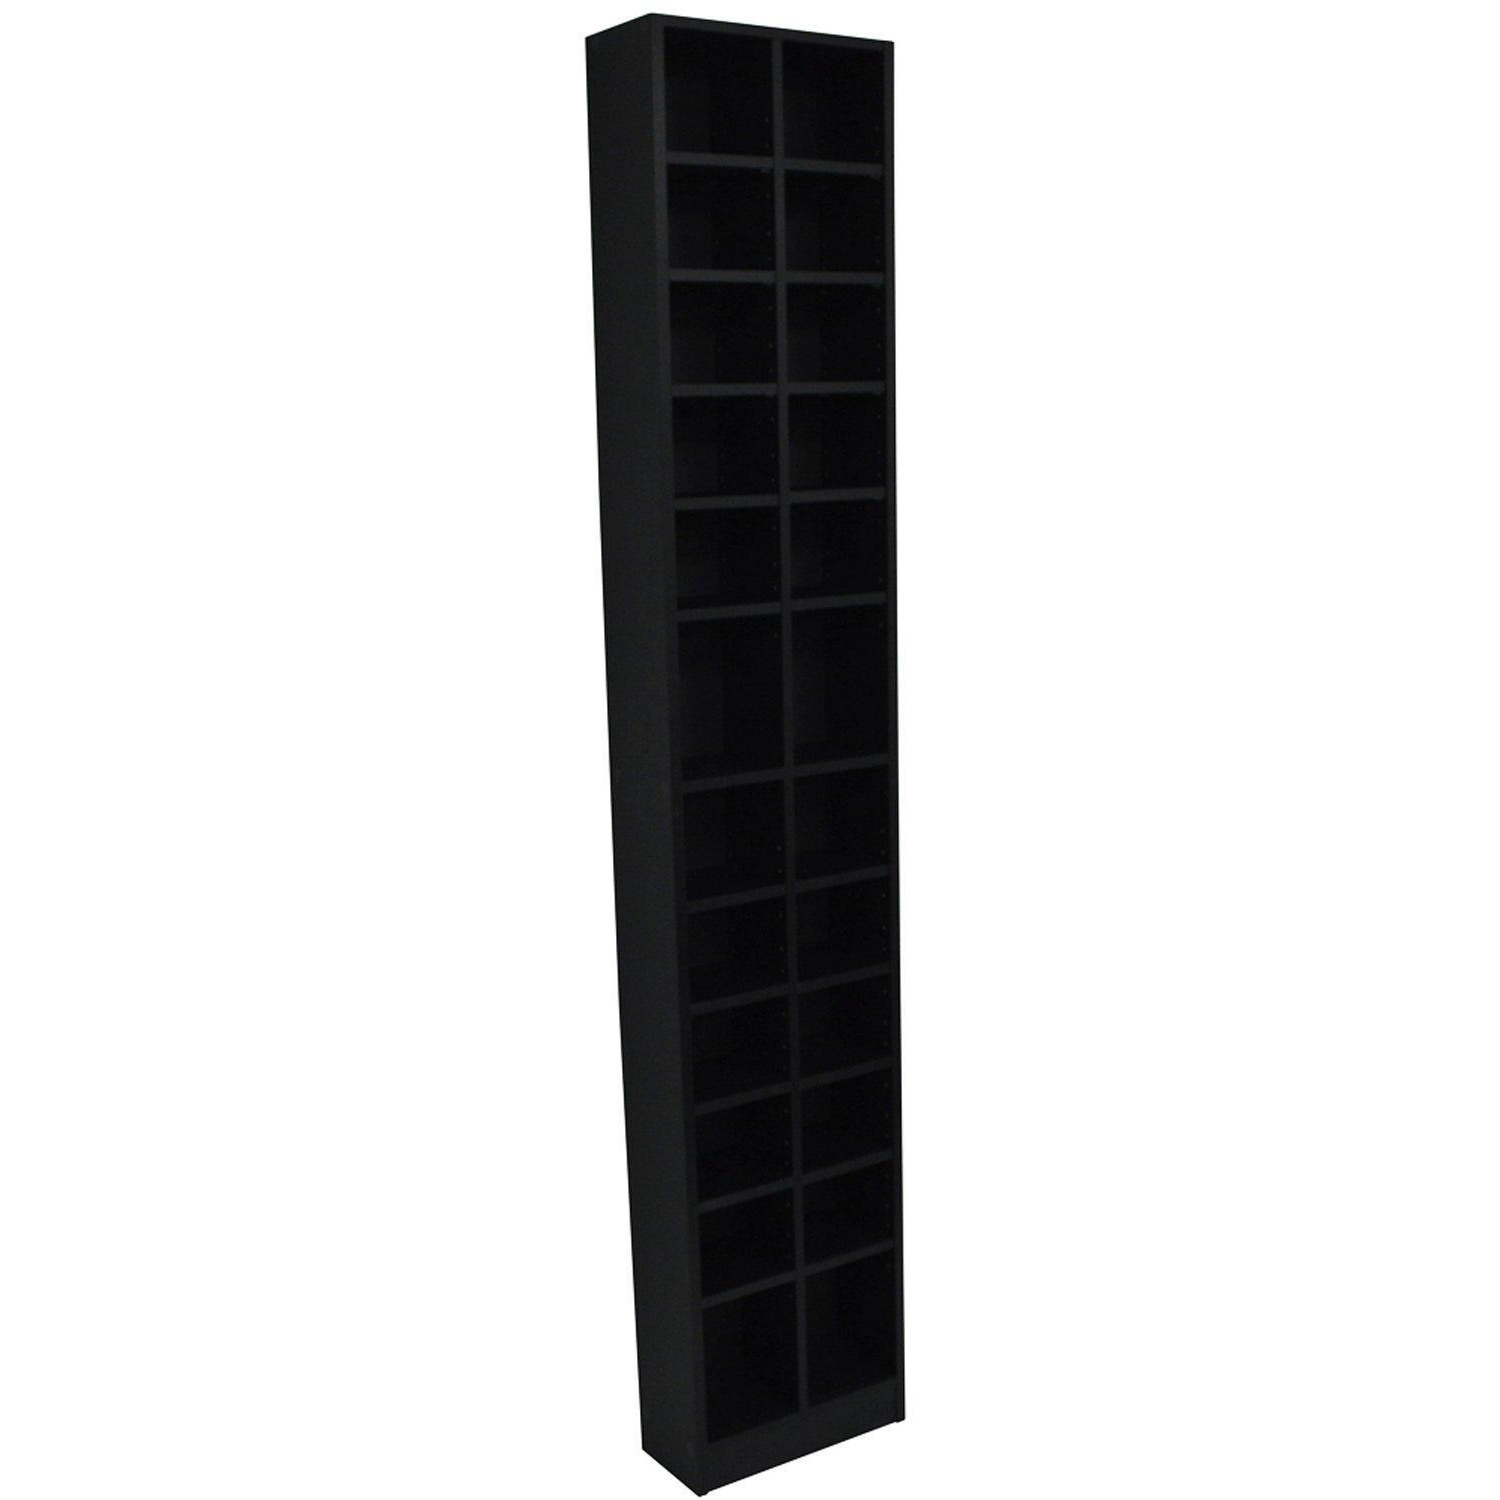 'Block' - Tall Sleek 360 Cd / 160 Dvd Media Storage Tower Shelves - Black - image 1